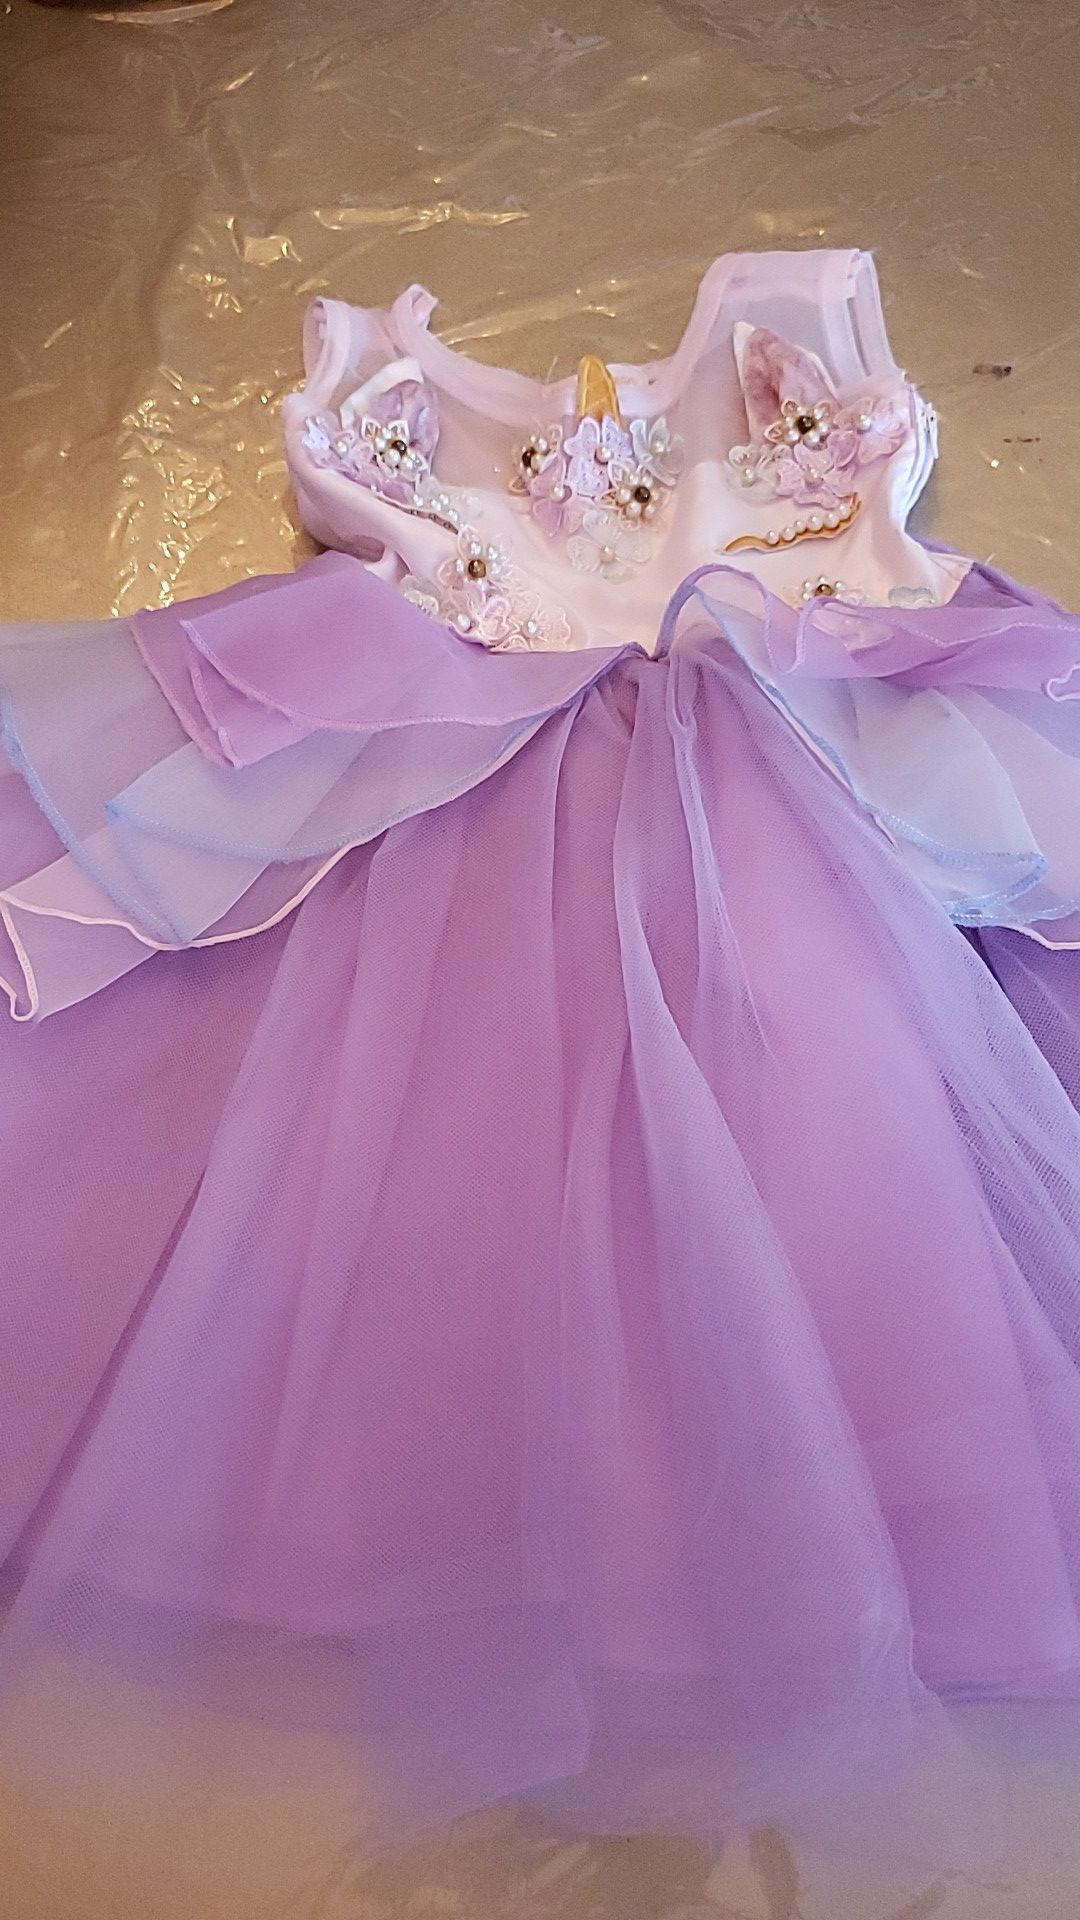 unicorn dress with pearl and flowers . tutu unicorn dress size 3